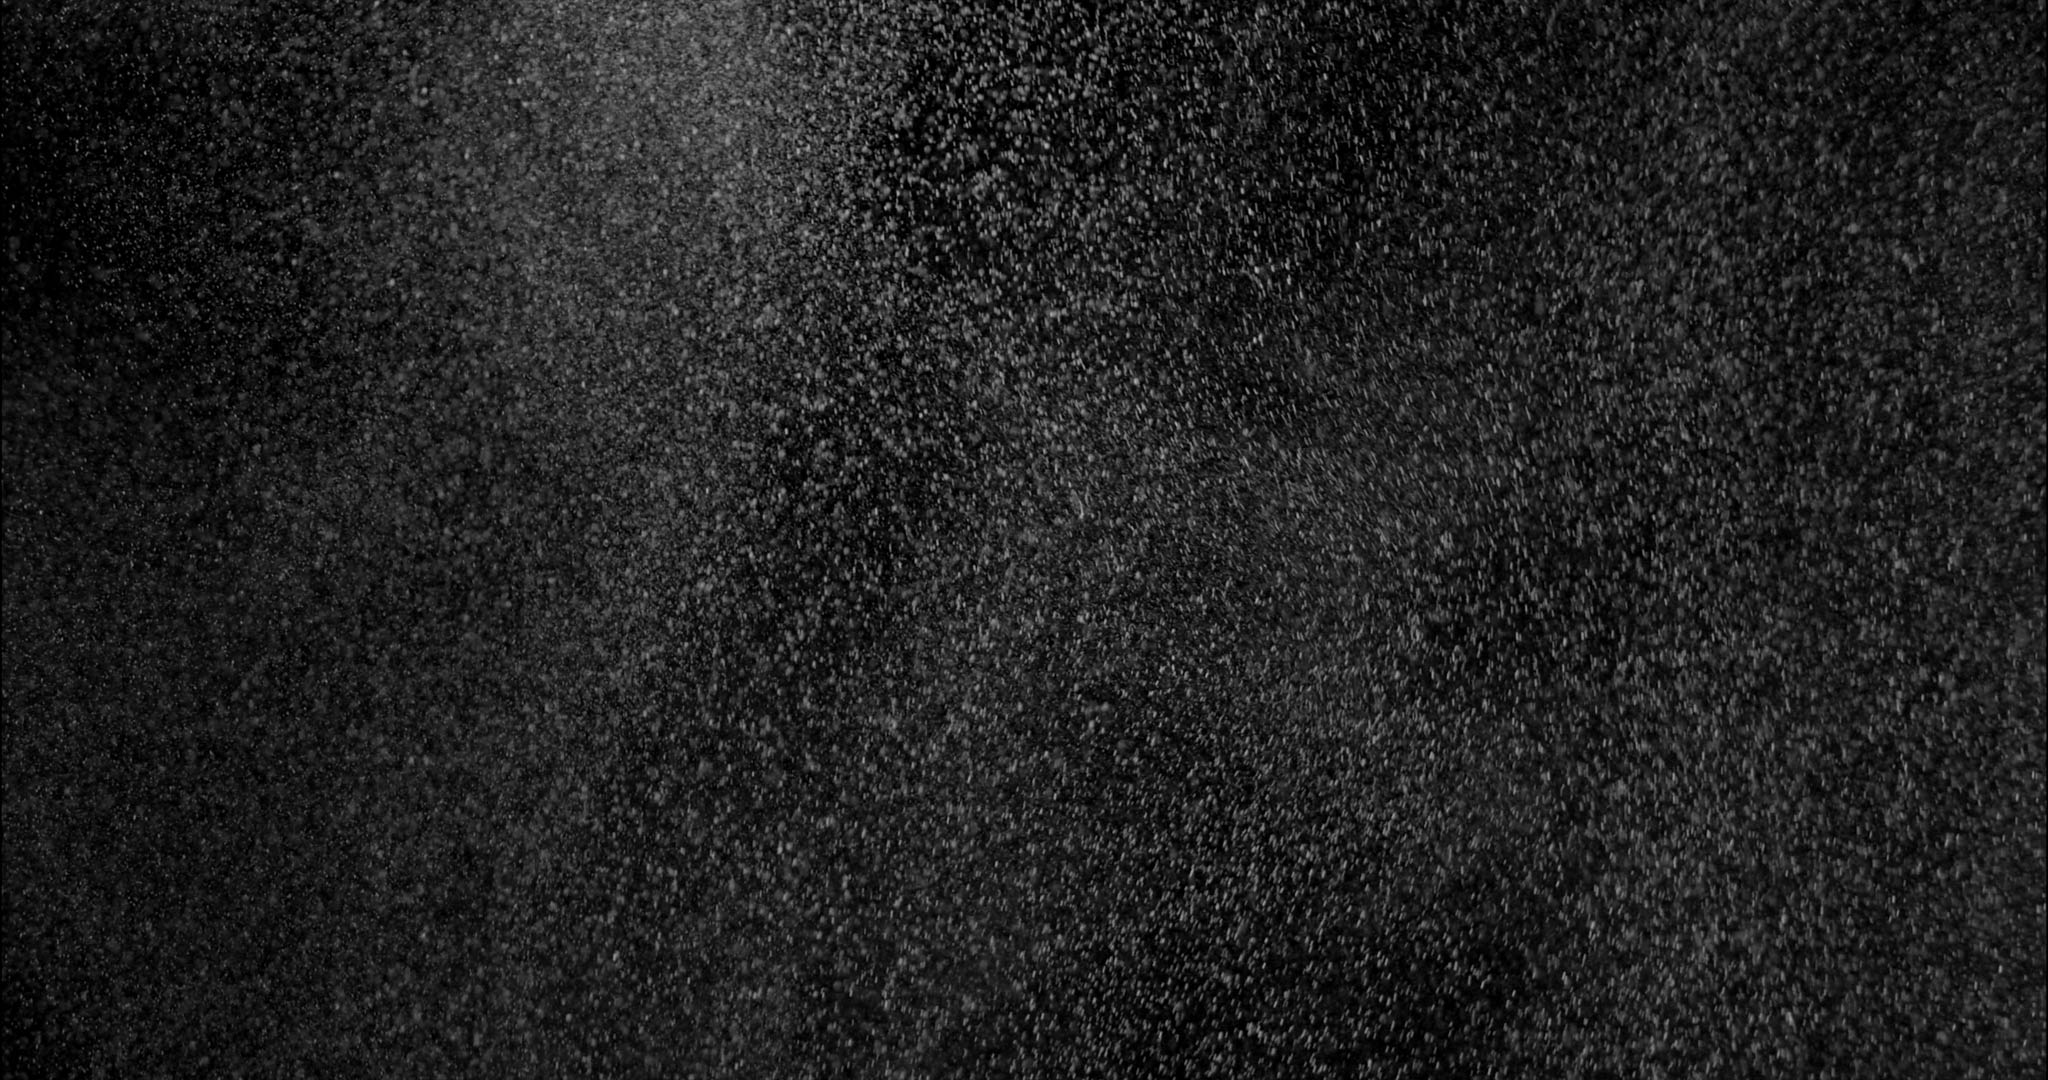 Dust Particles Wide 019